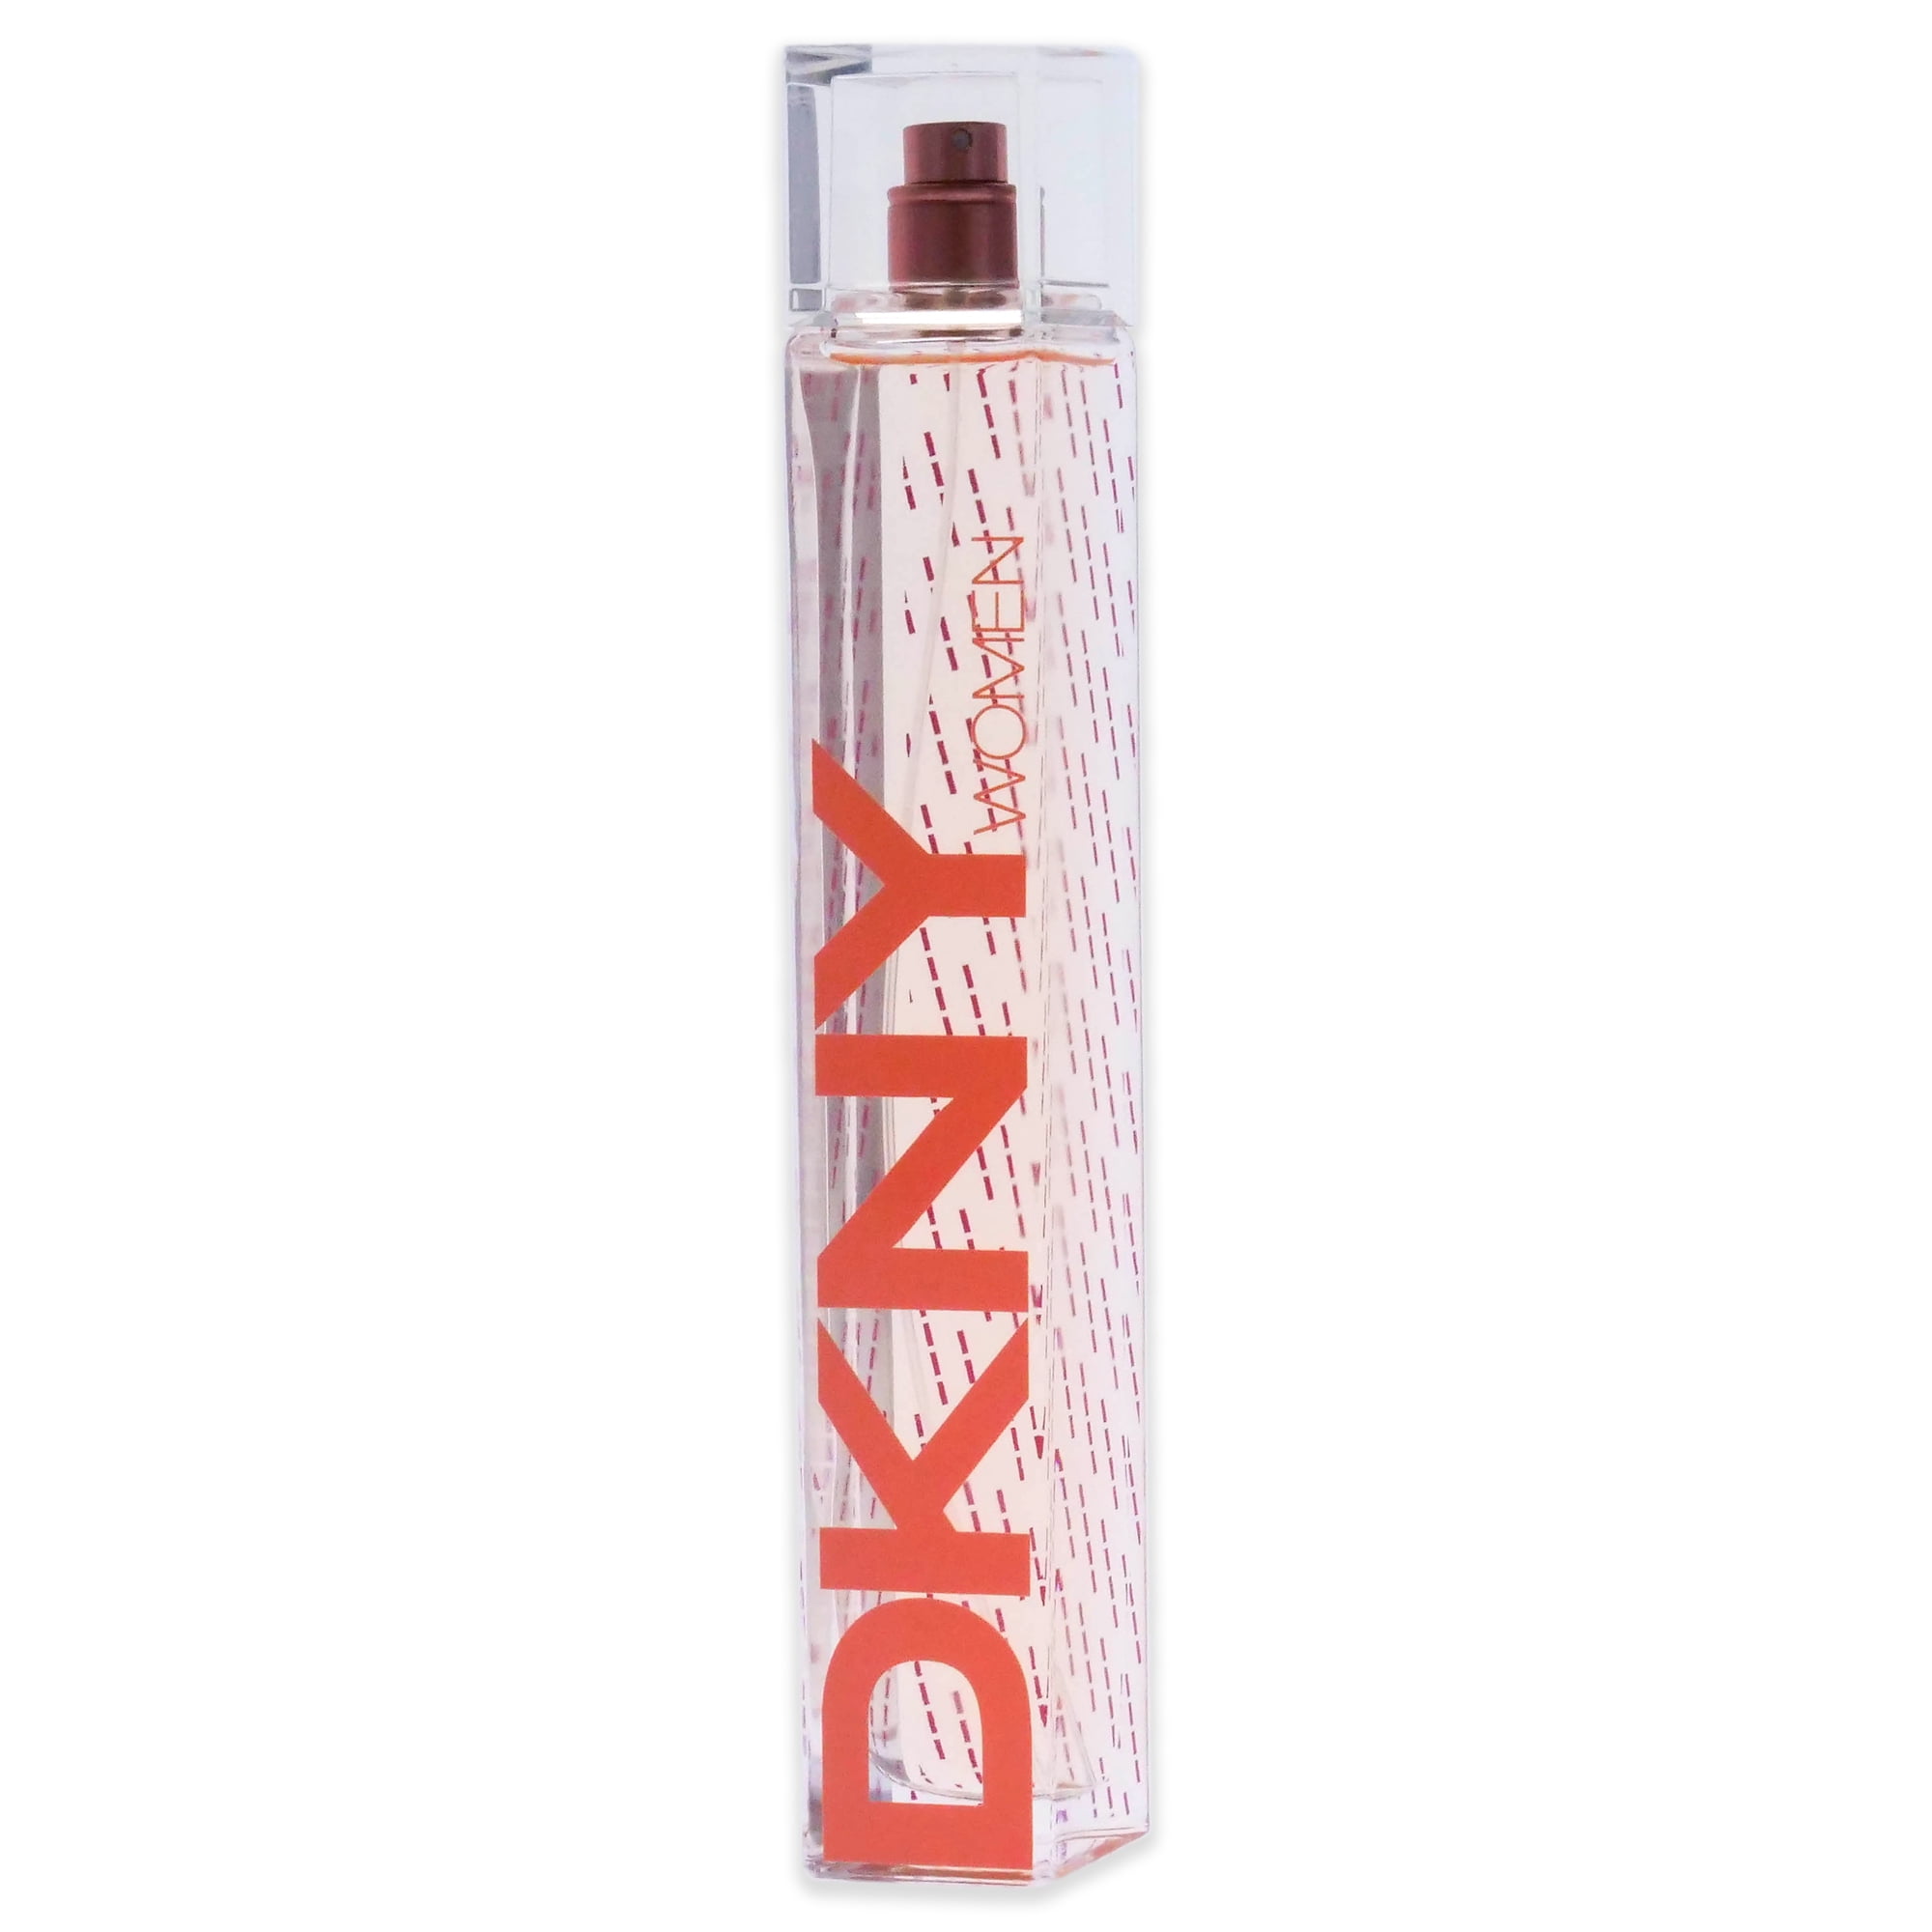 DKNY FOR MEN BY DONNA KARAN - ENERGIZING EAU DE TOILETTE SPRAY – Fragrance  Room